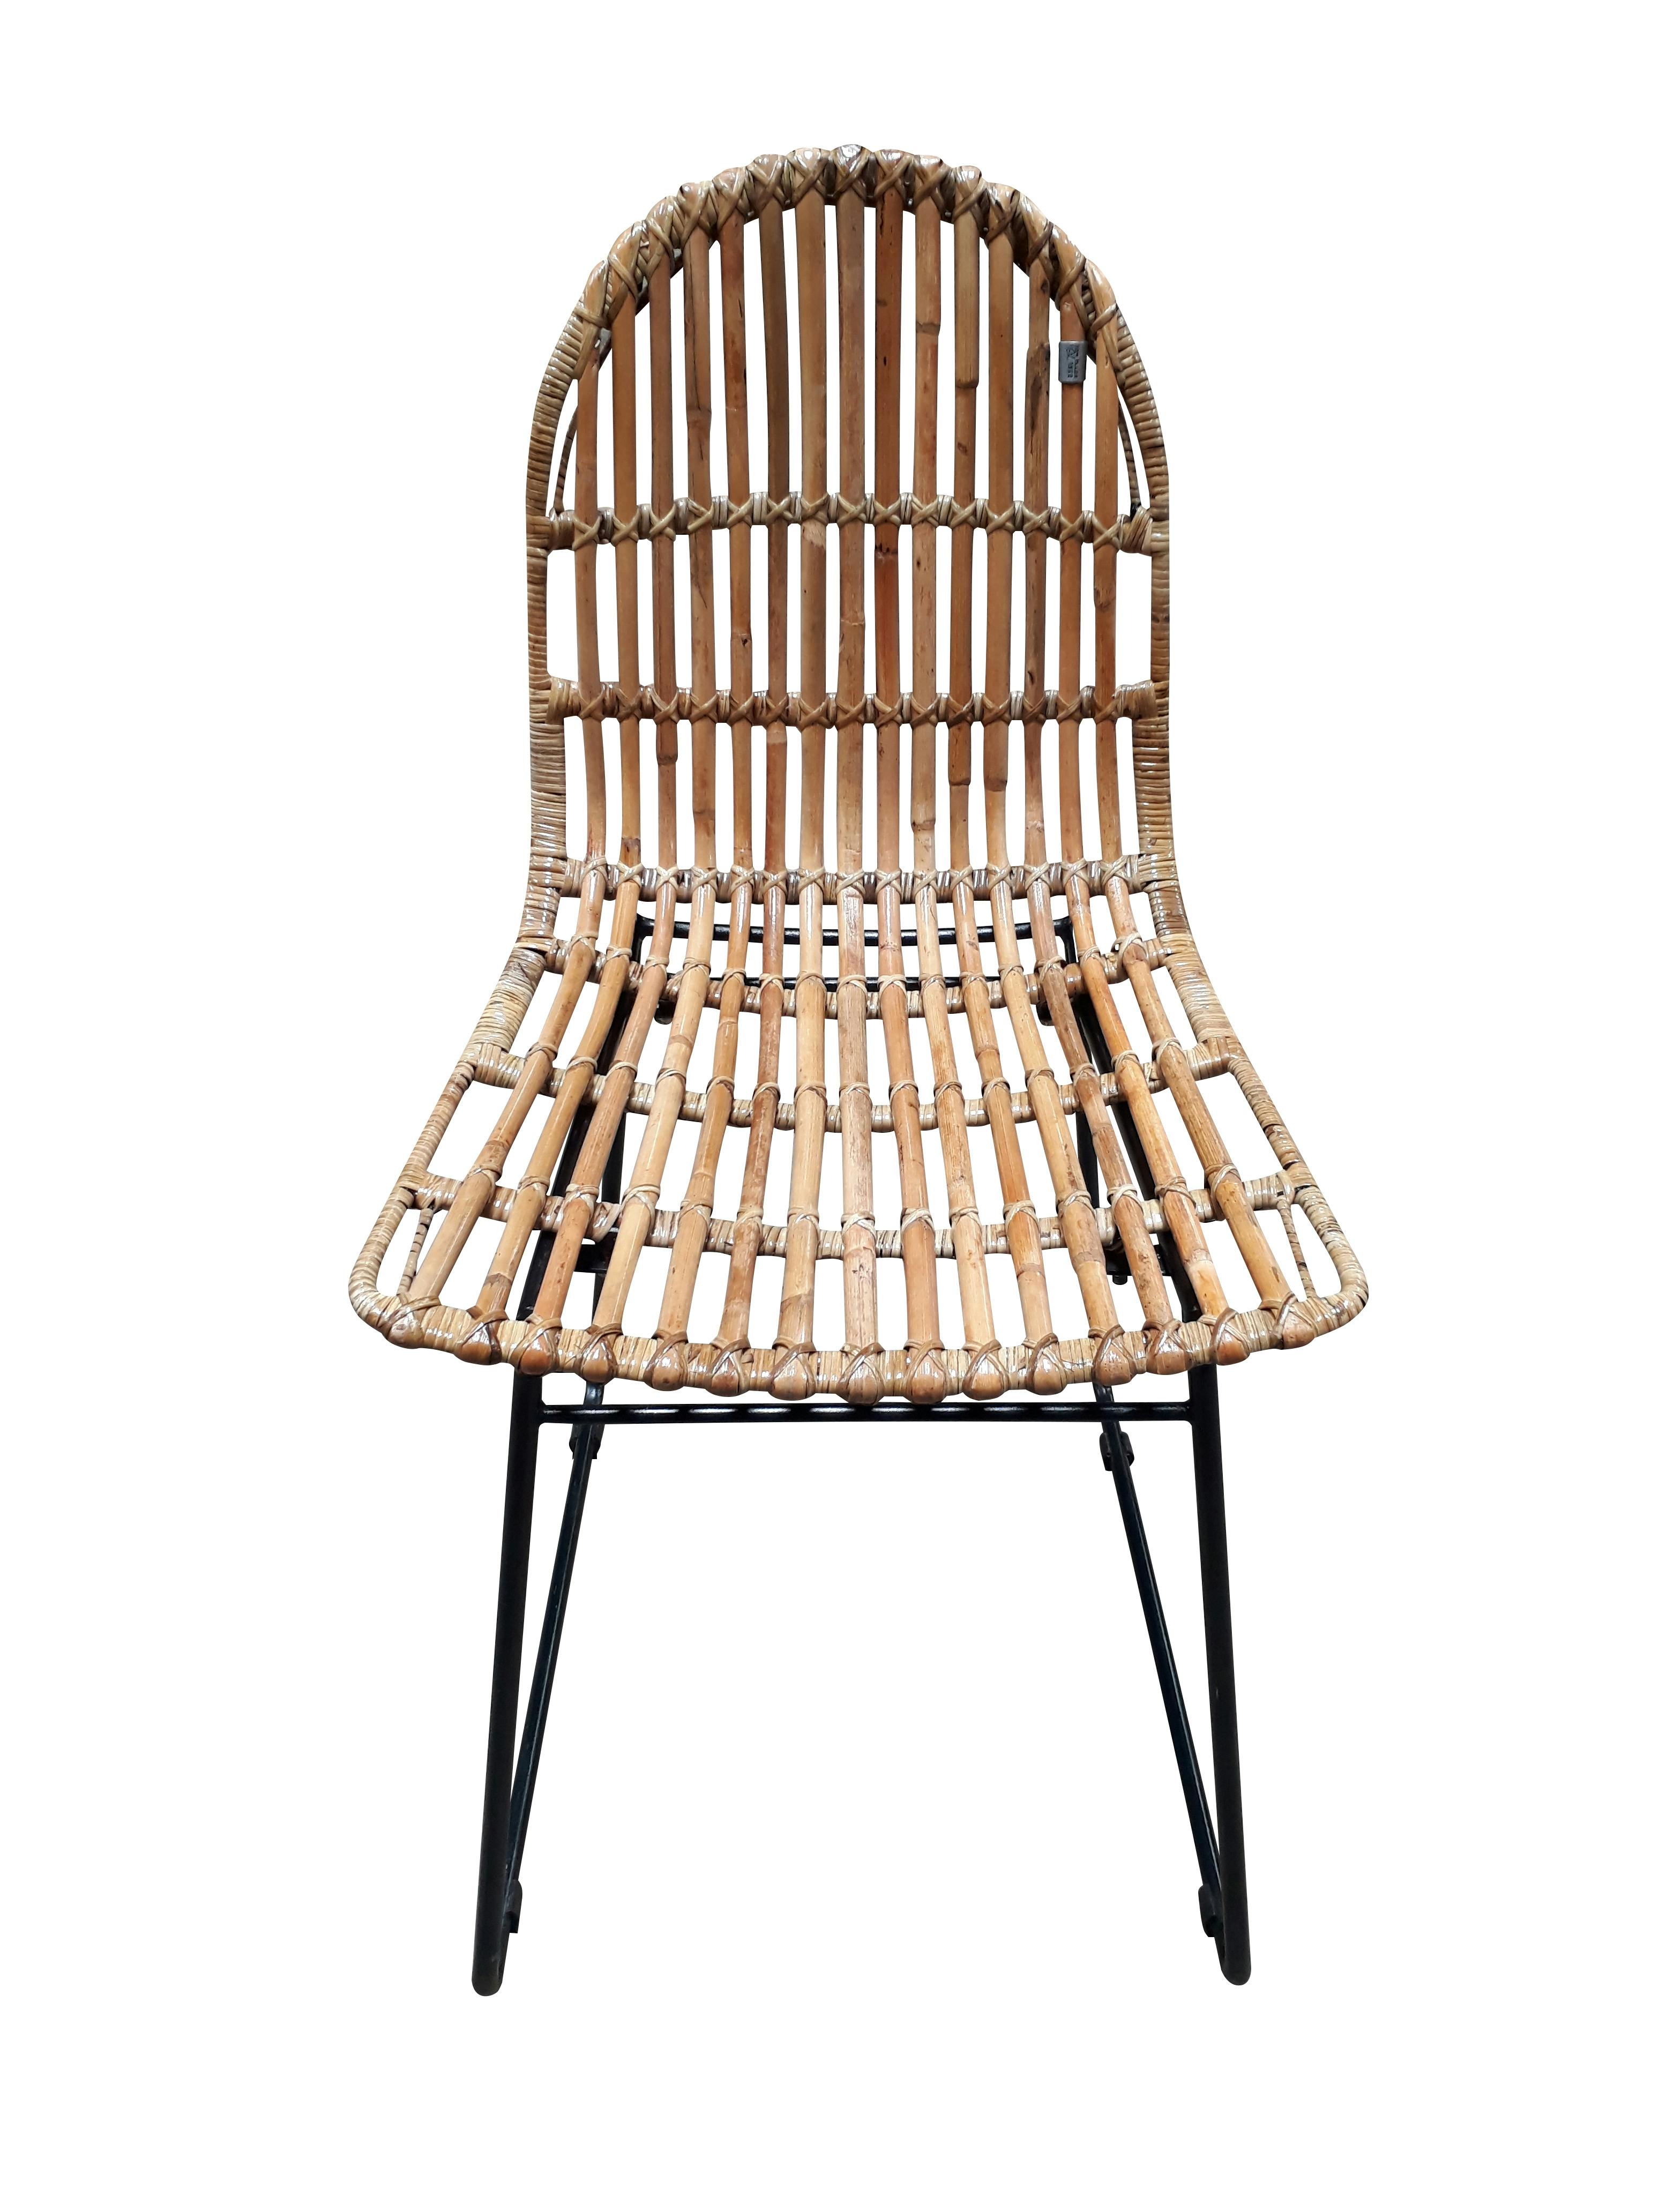 SIT Möbel Stuhl Tom Tailor Sitzschale Gestell | | 84,5 50 RATTAN 60 | x schwarz 2er-Set B T 05338-01 Serie H Metall | Rattan METRO natur | Marktplatz | x cm